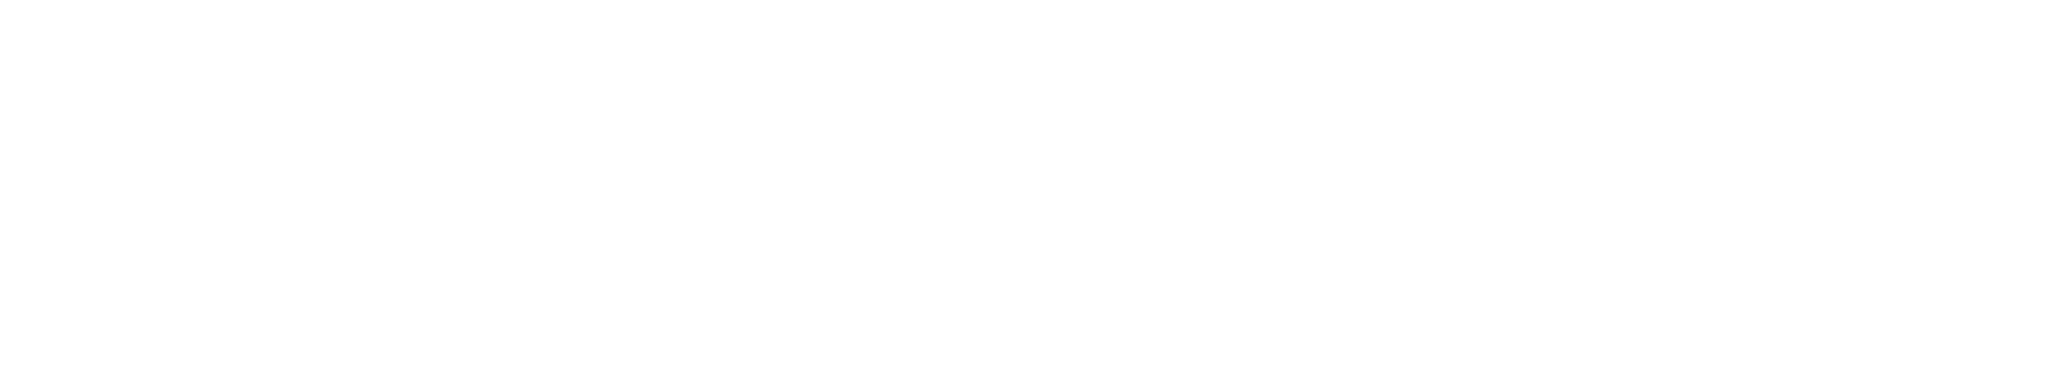 Atlee Design Graphic Design and Artworking Fleet Farnham Hampshire Surrey Logo